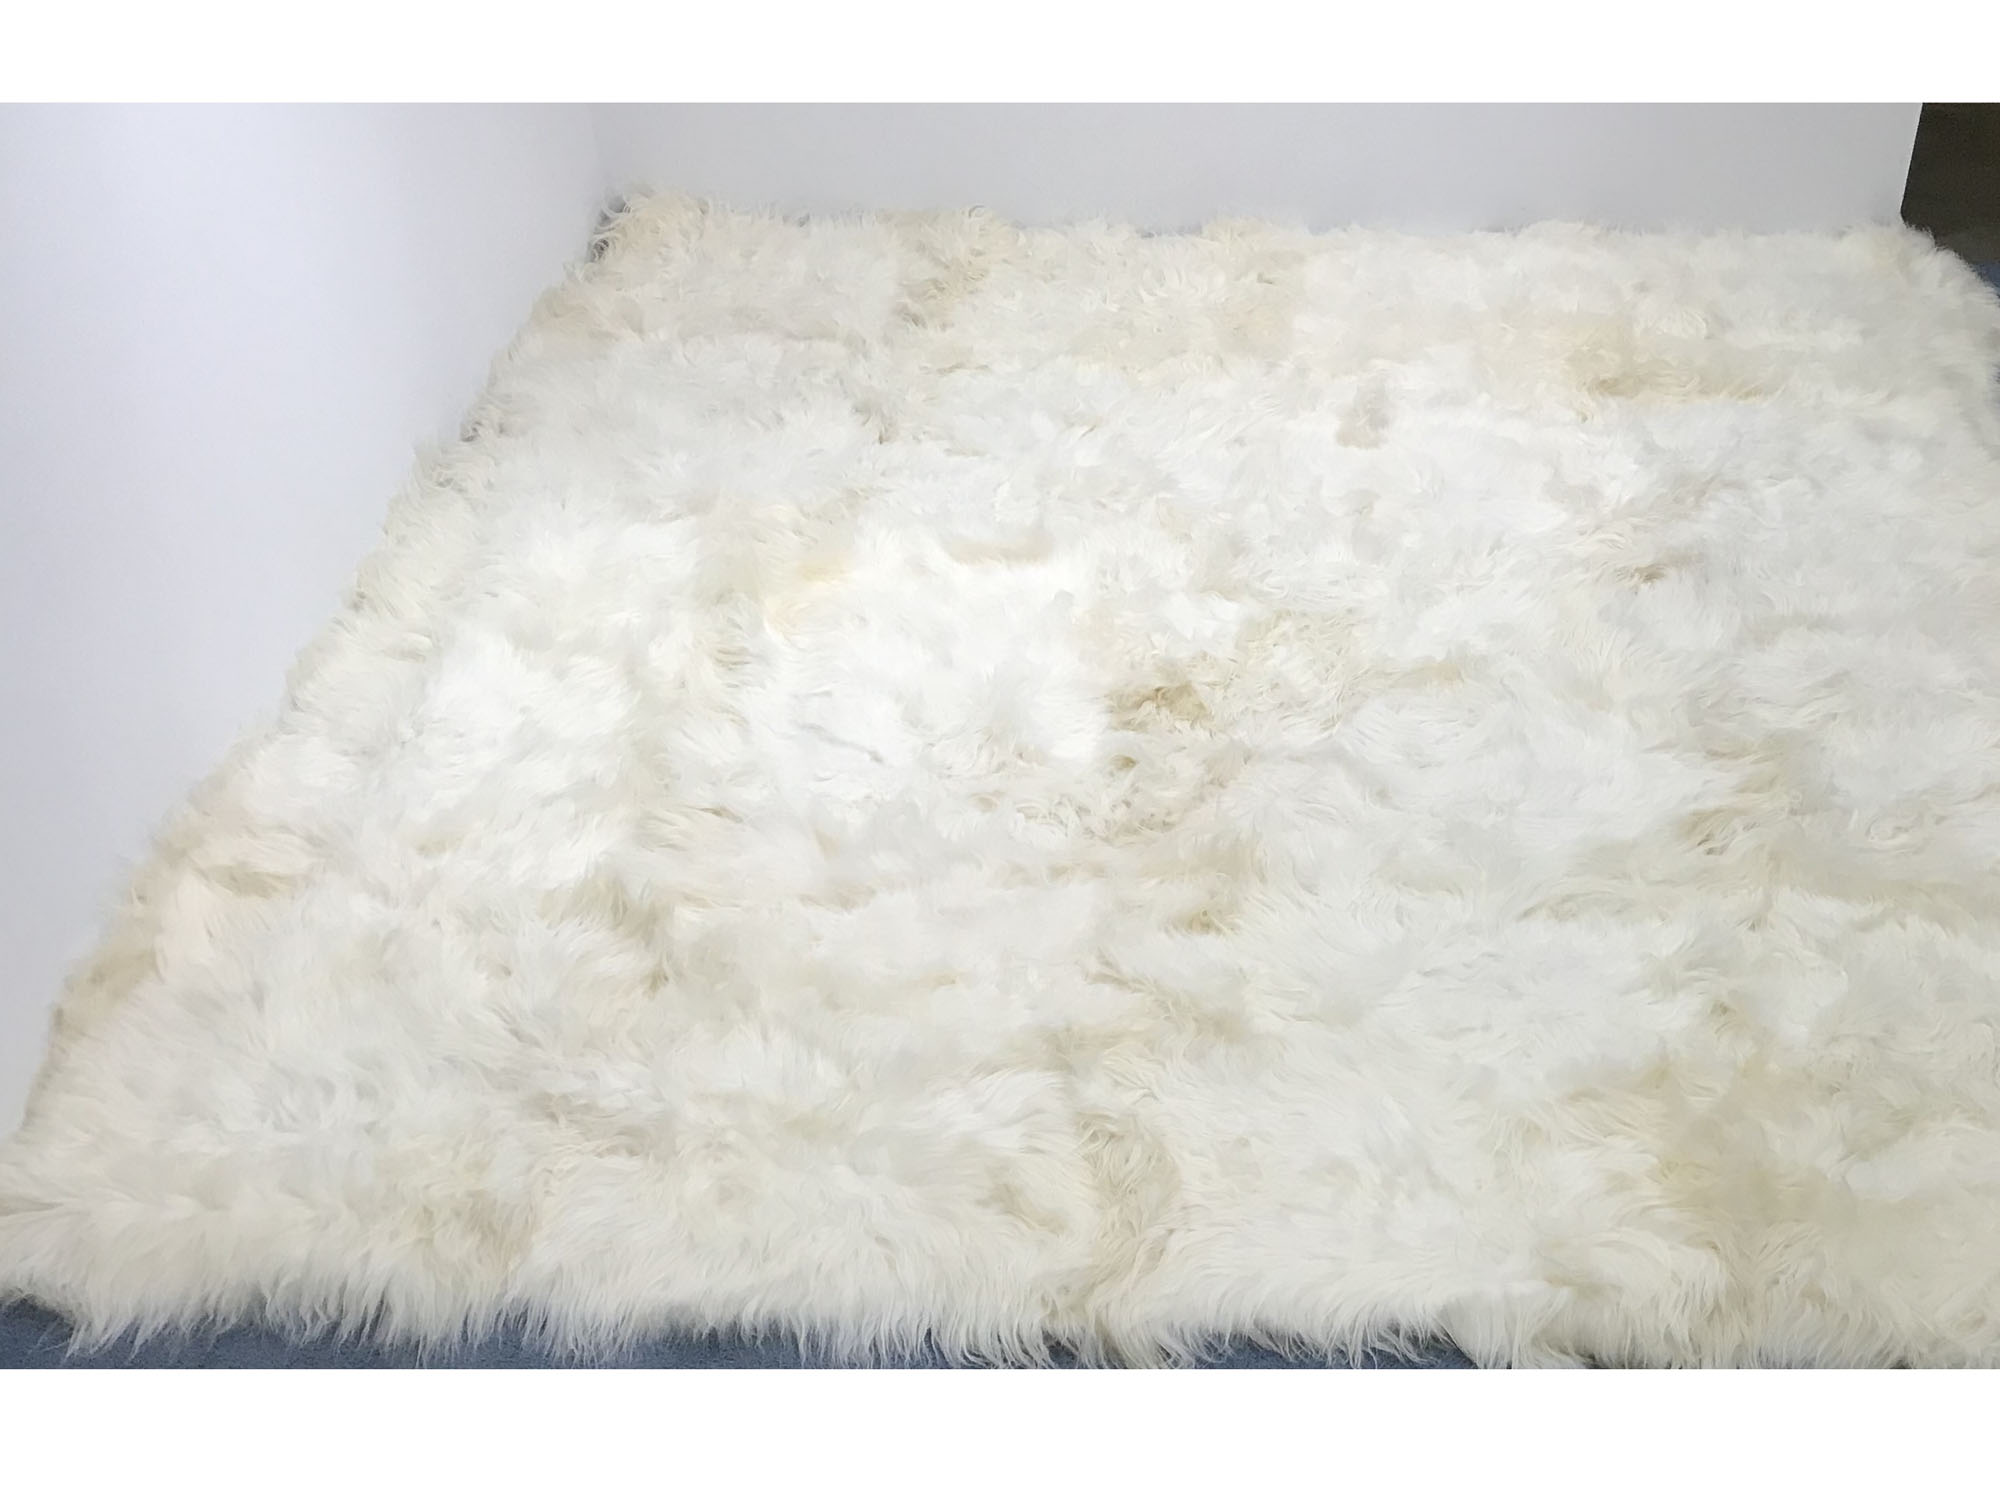 Icelandic Sheepskin Rug: ~12x12 ft: White: Gallery item 